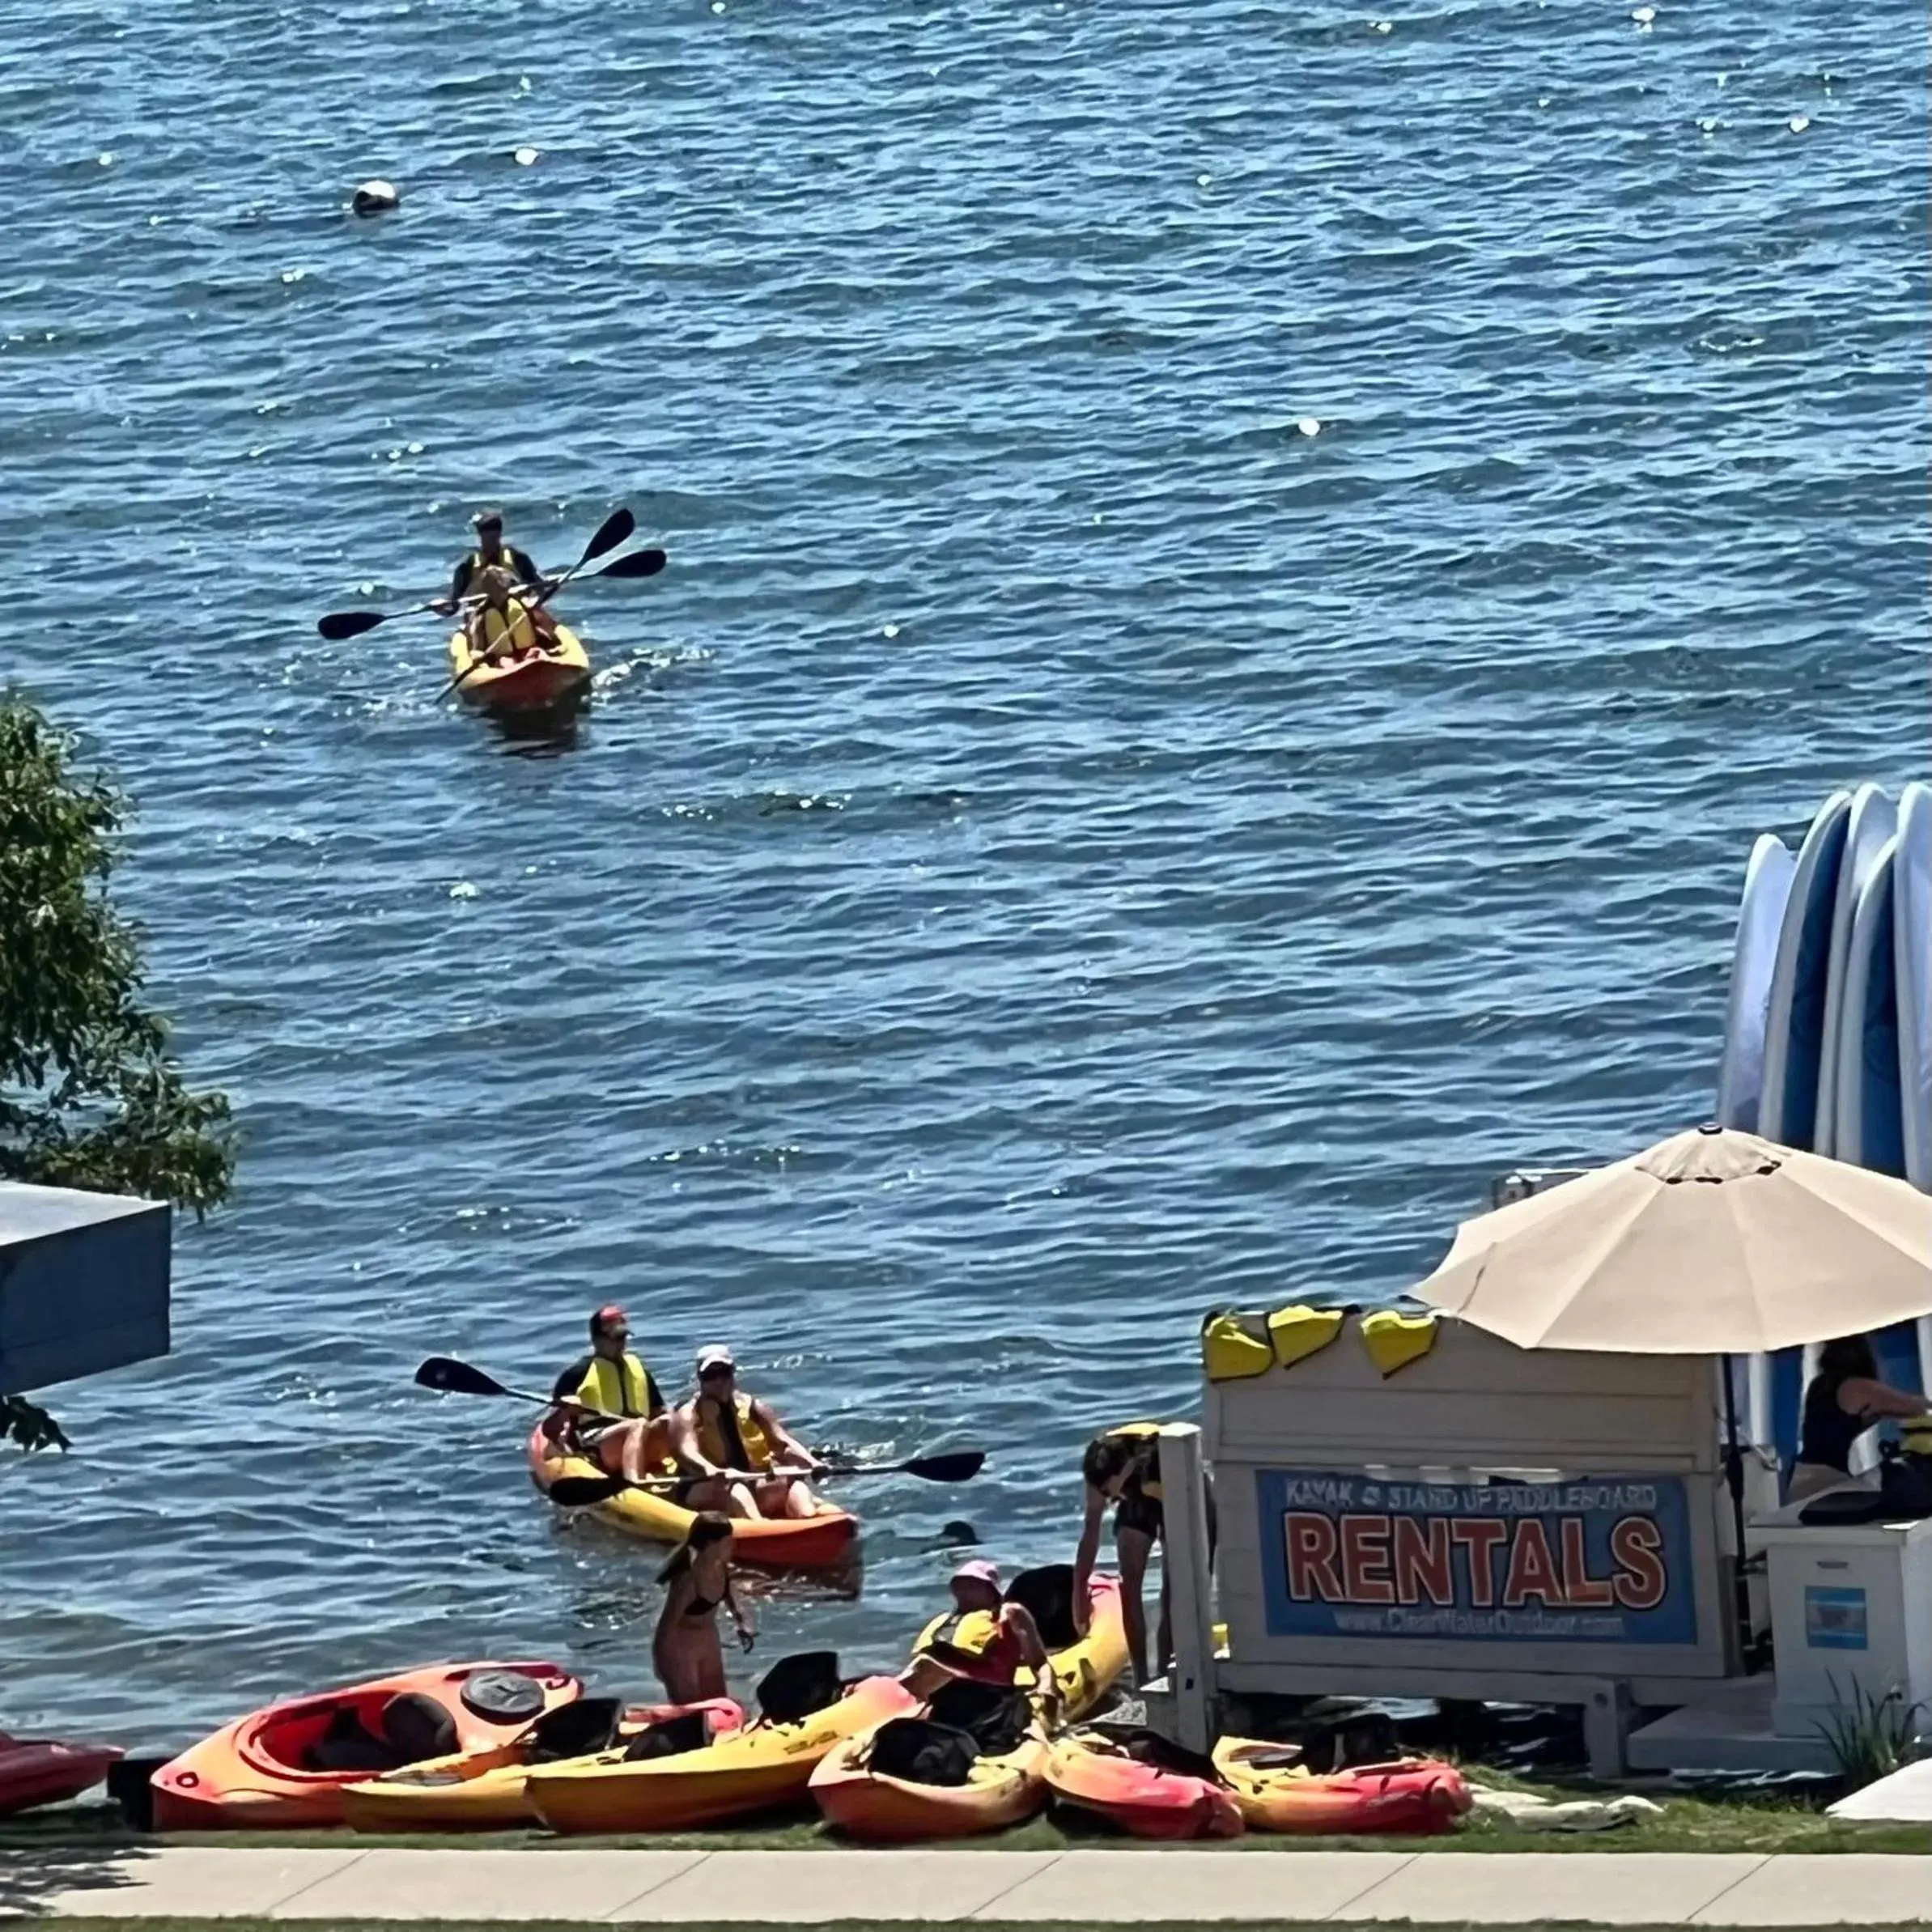 Area and facilities in Harbor Shores on Lake Geneva